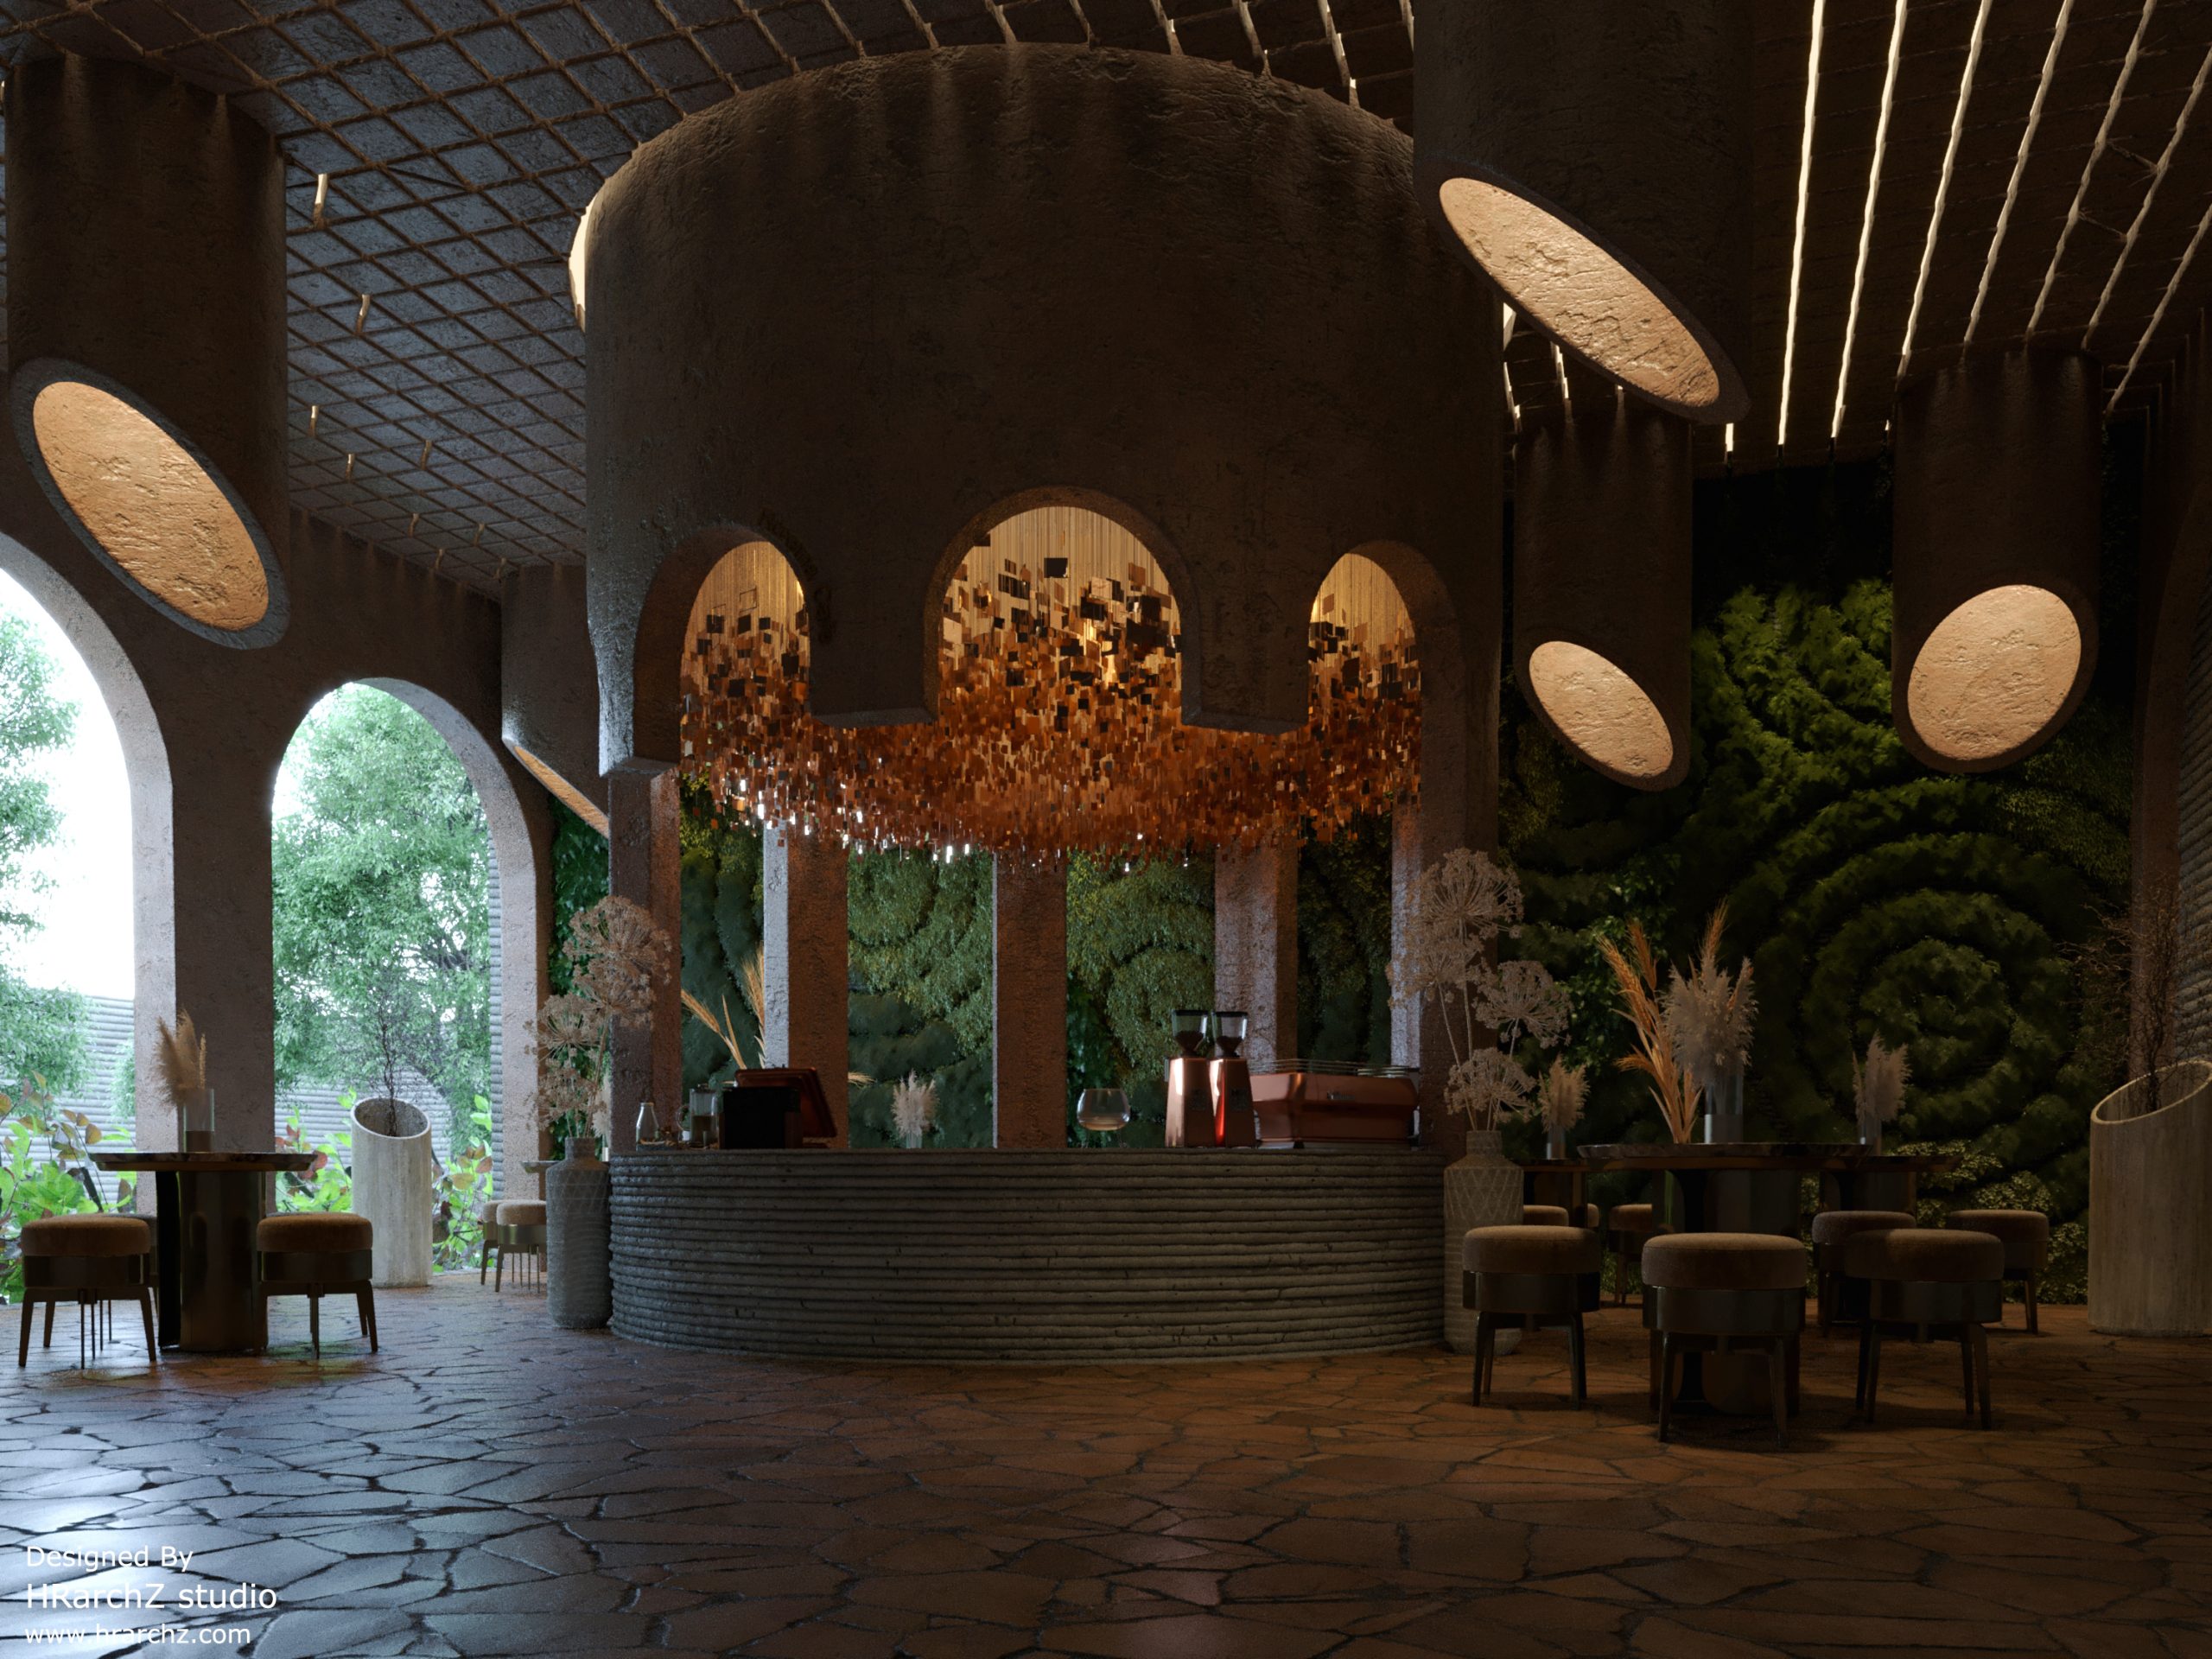 REXANA CAFE DESIGN - INTERIOR DESIGN - CASTLE MOOD - HISTORICAL BUILDING - LIGHTING  